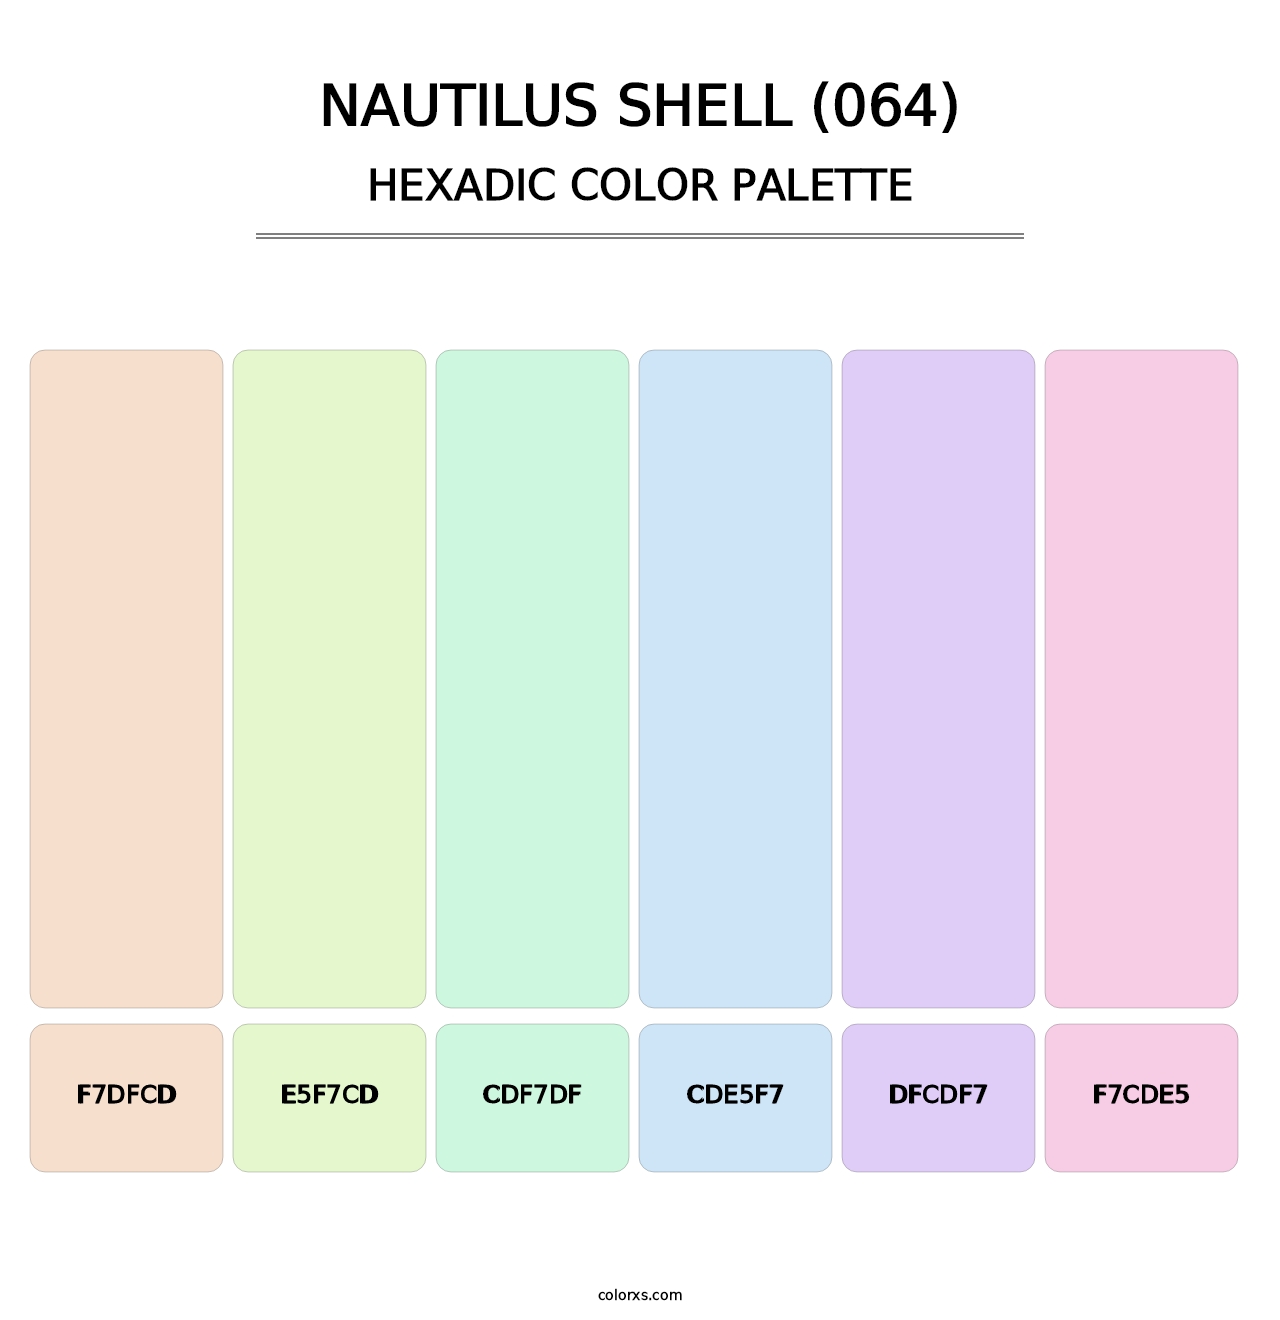 Nautilus Shell (064) - Hexadic Color Palette